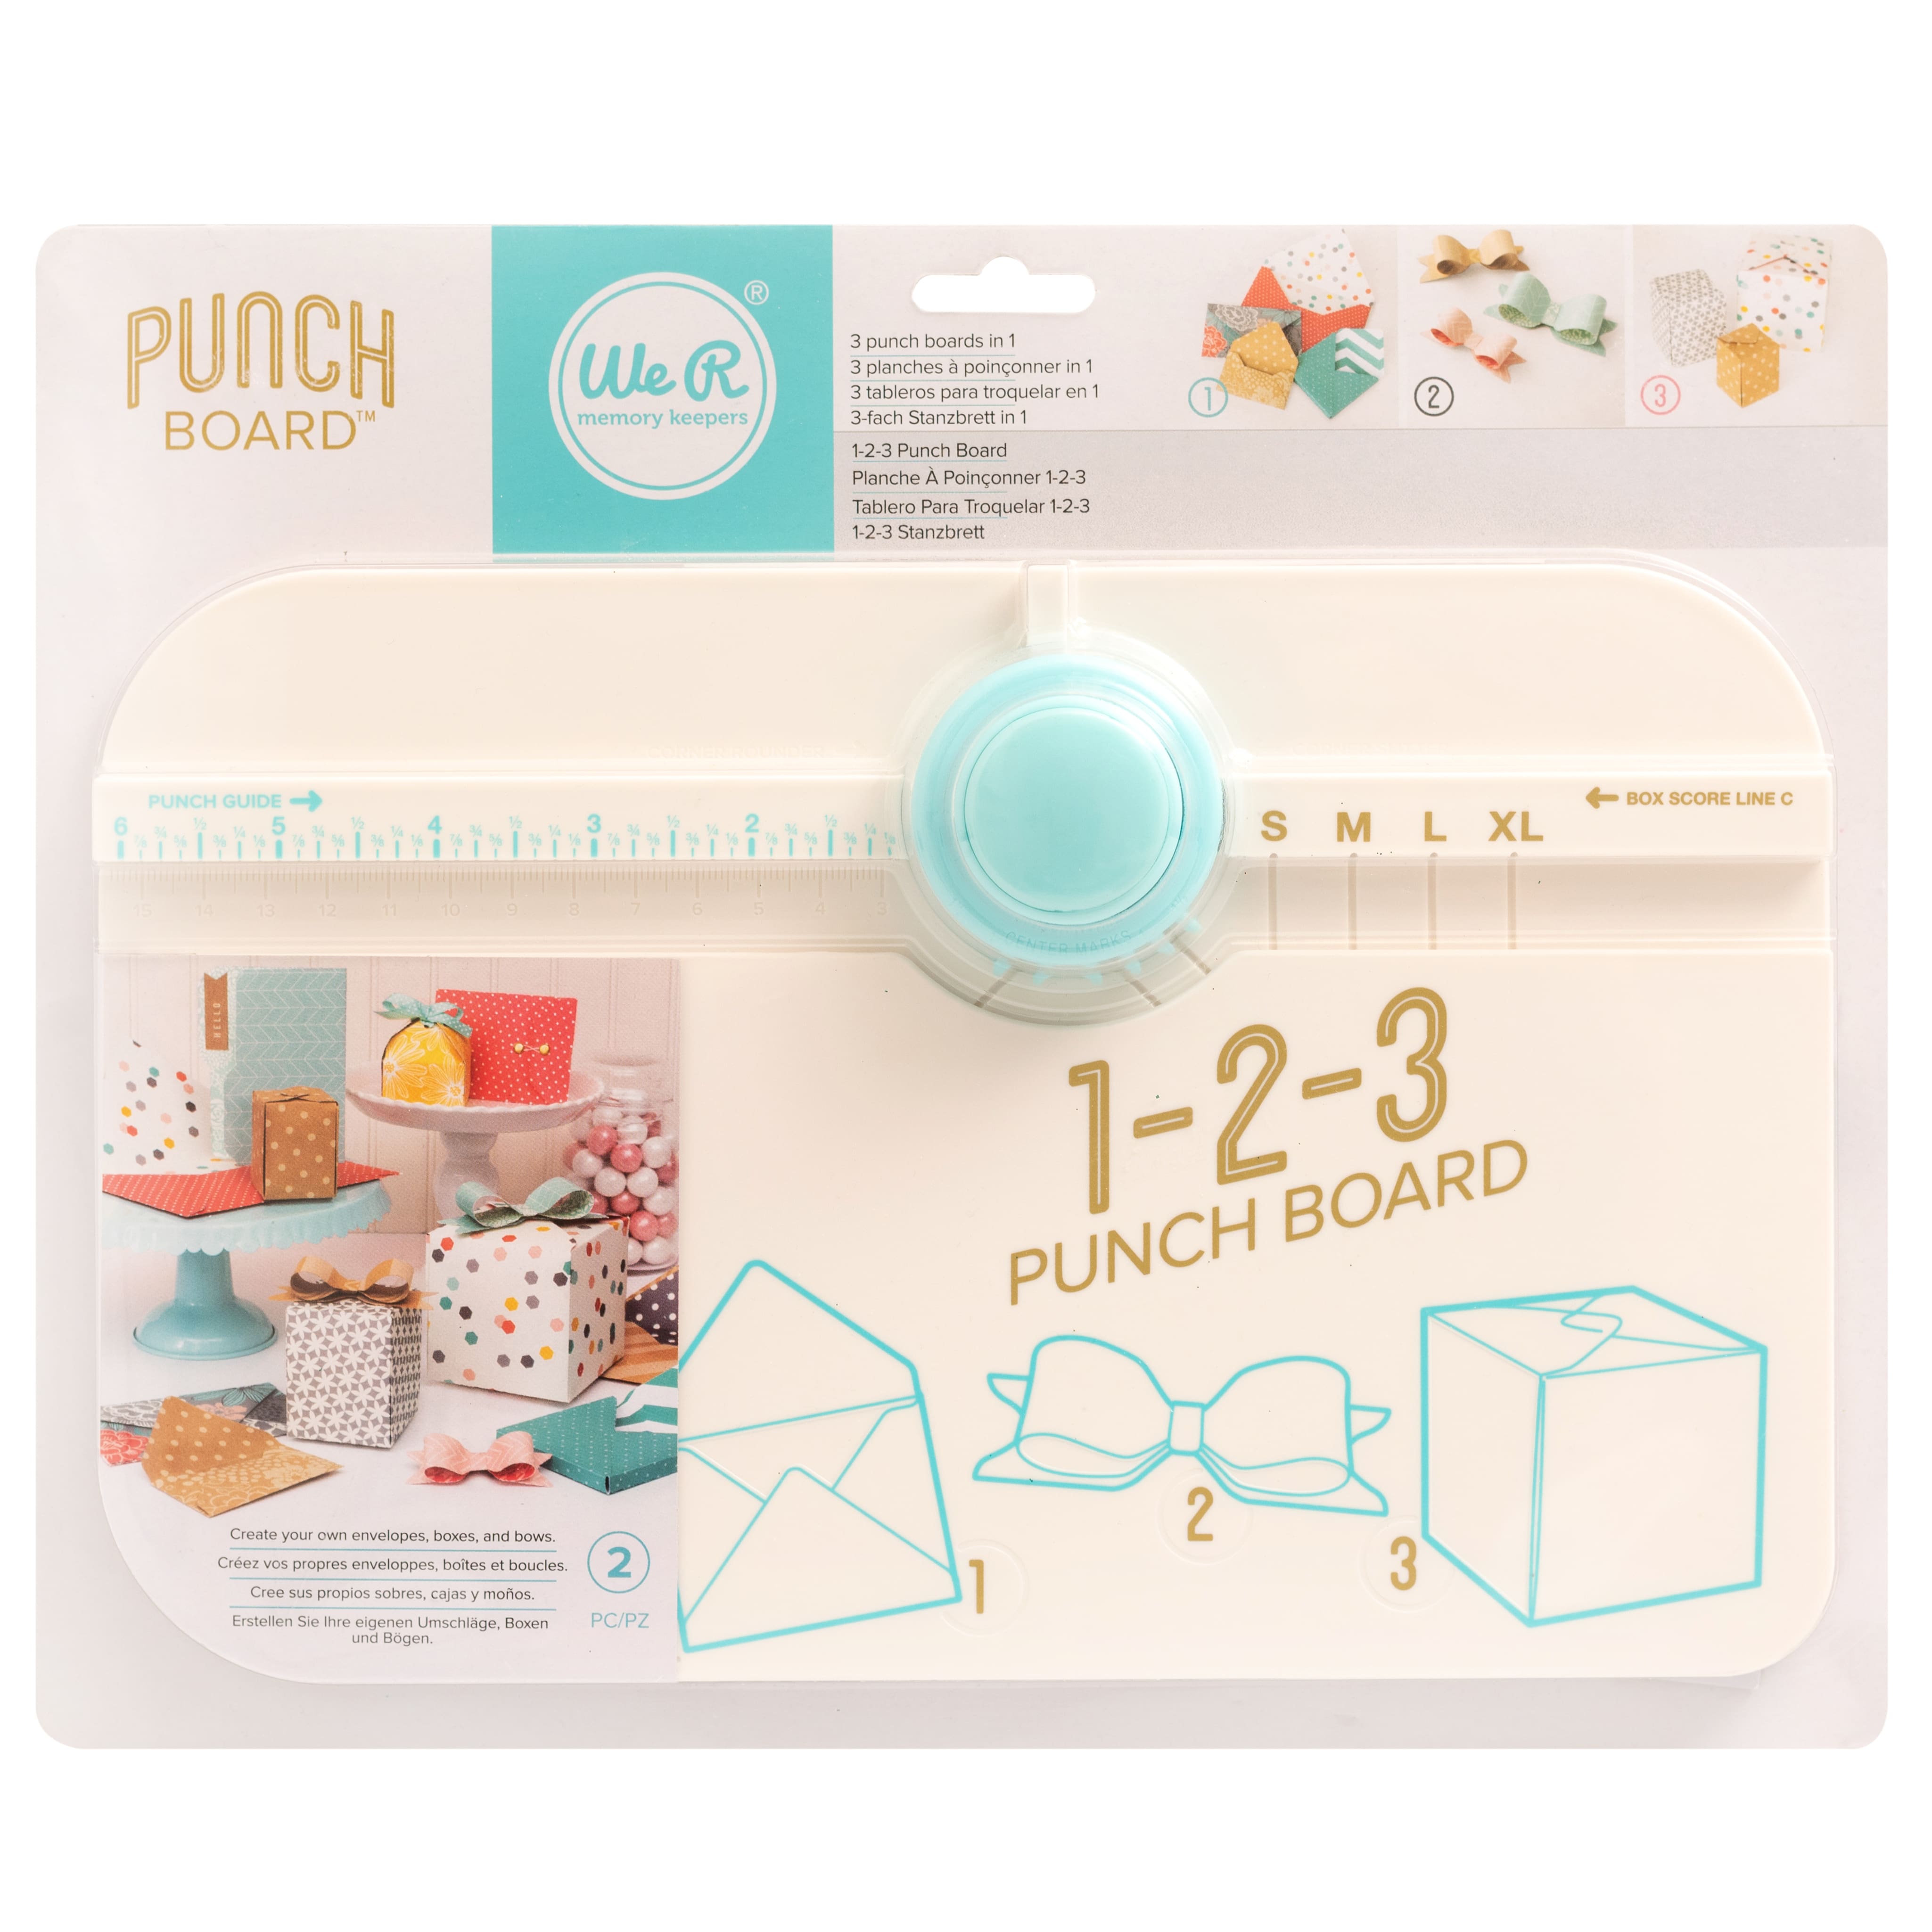 3 Hole Punch Desktop - The School Box Inc